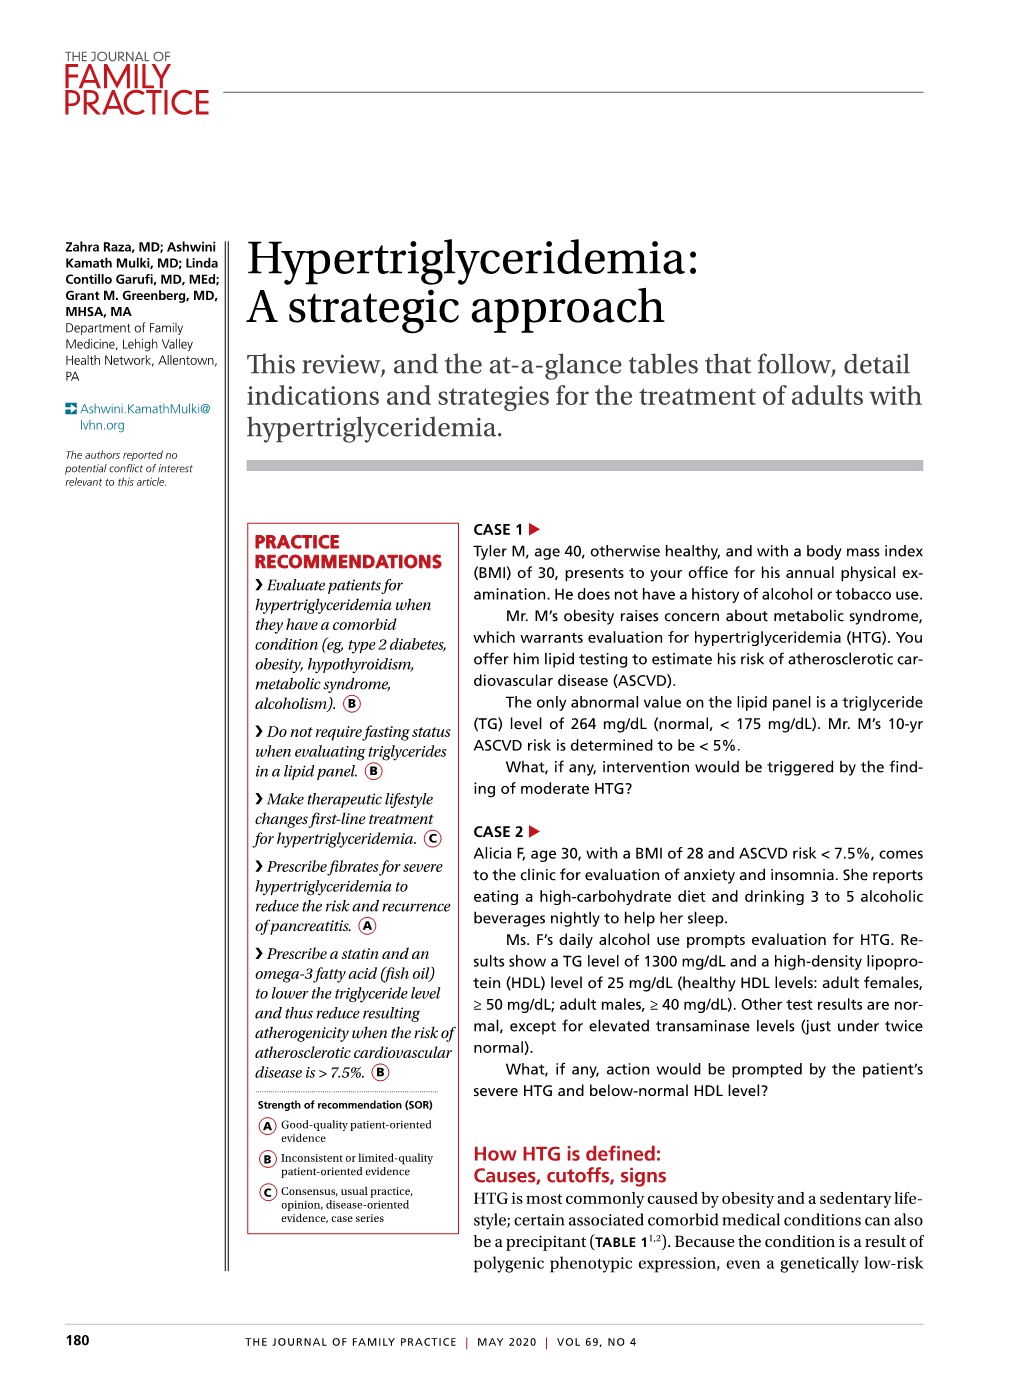 Hypertriglyceridemia: a Strategic Approach